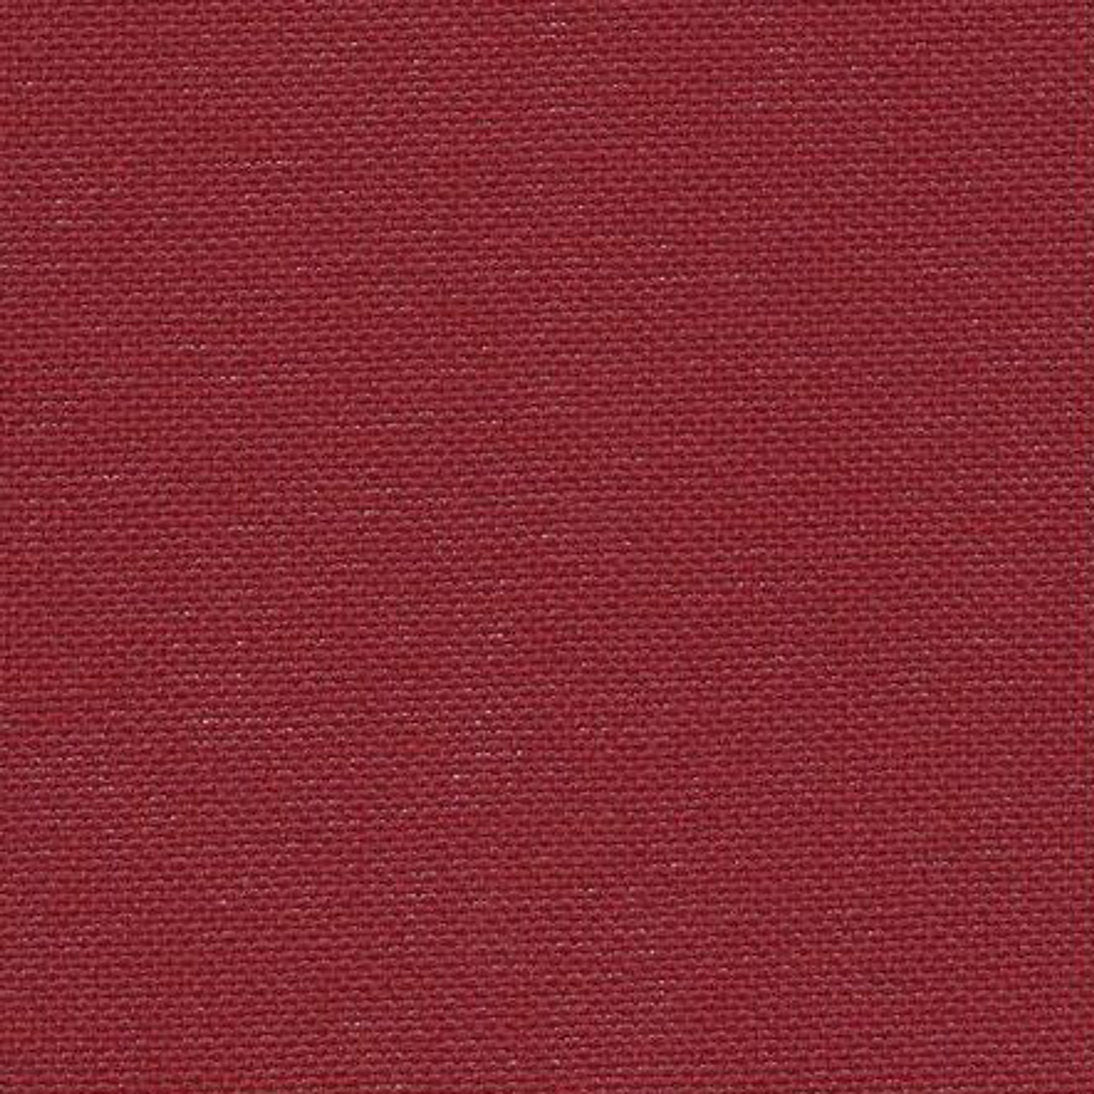 Murano Lugana fabric 32 ct. Ruby Wine by ZWEIGART for Cross Stitch - 3984/9060